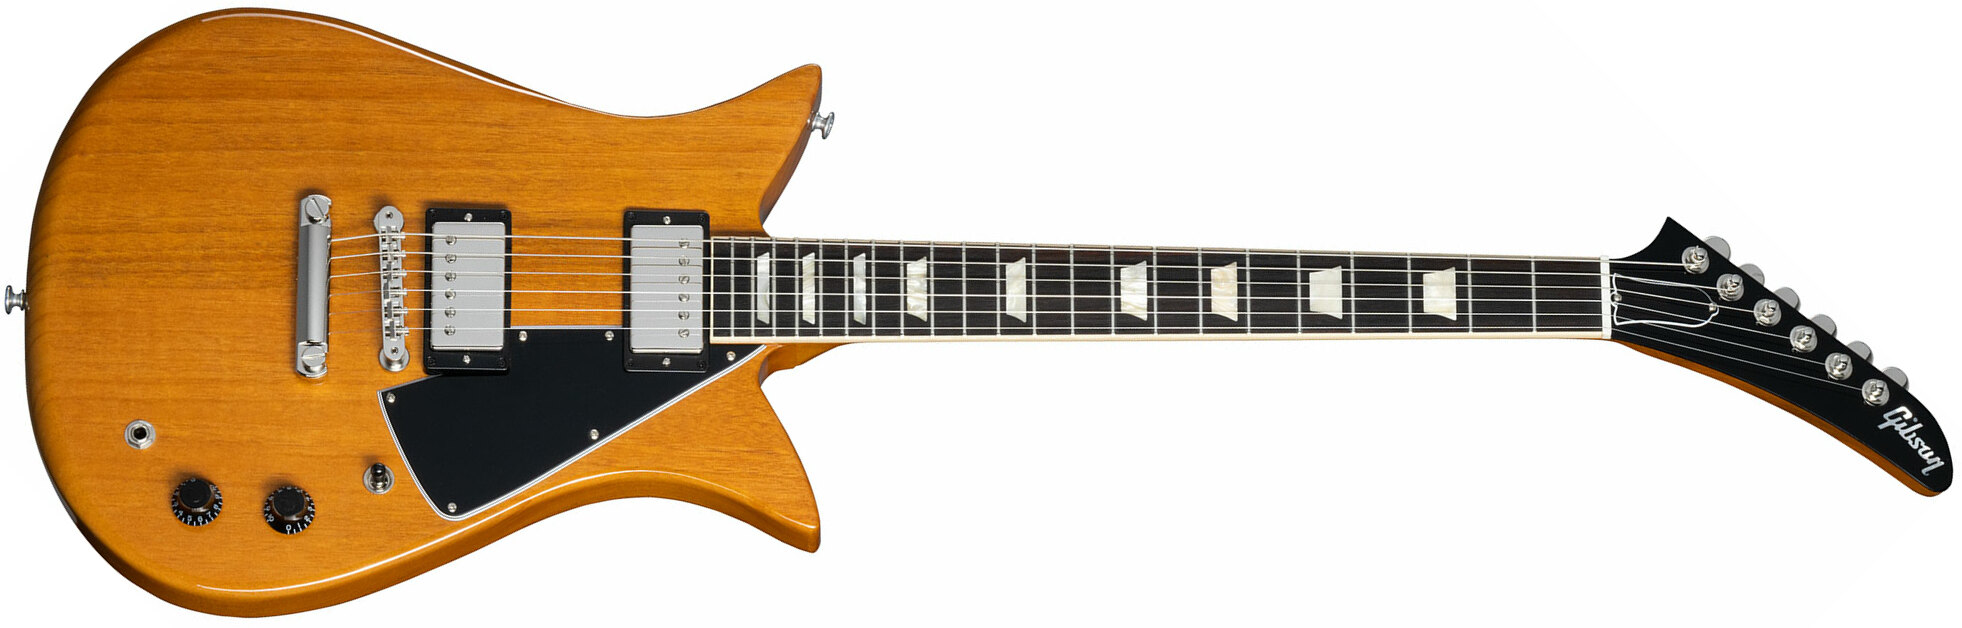 Gibson Theodore Standard Original 2h Ht Rw - Antique Natural - Retro-rock elektrische gitaar - Main picture